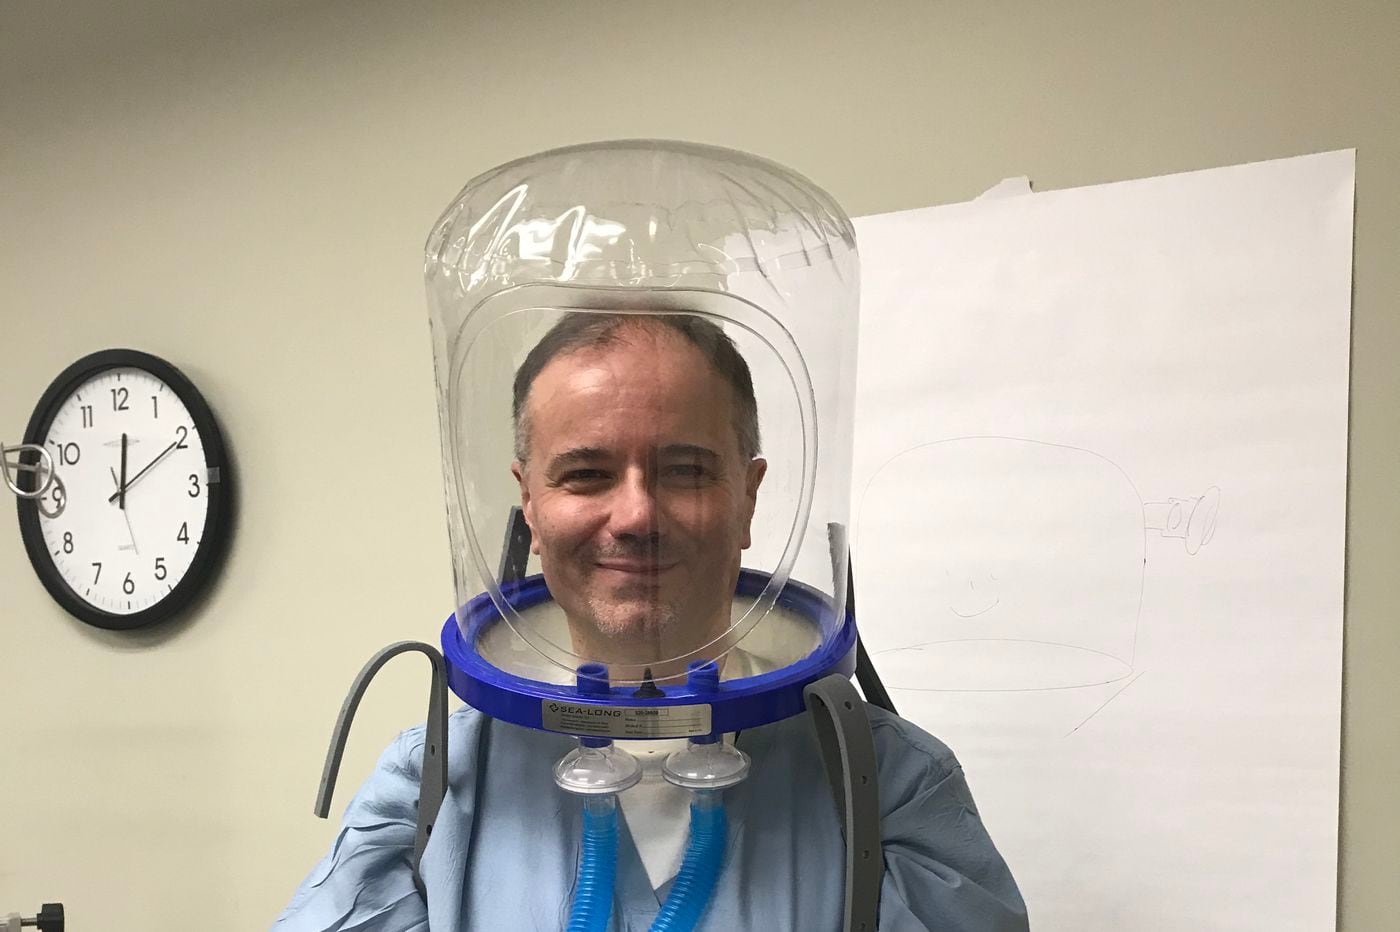 Bell-shaped oxygen helmets look like ‘Star Trek’ but help coronavirus patients at Penn’s hospitals